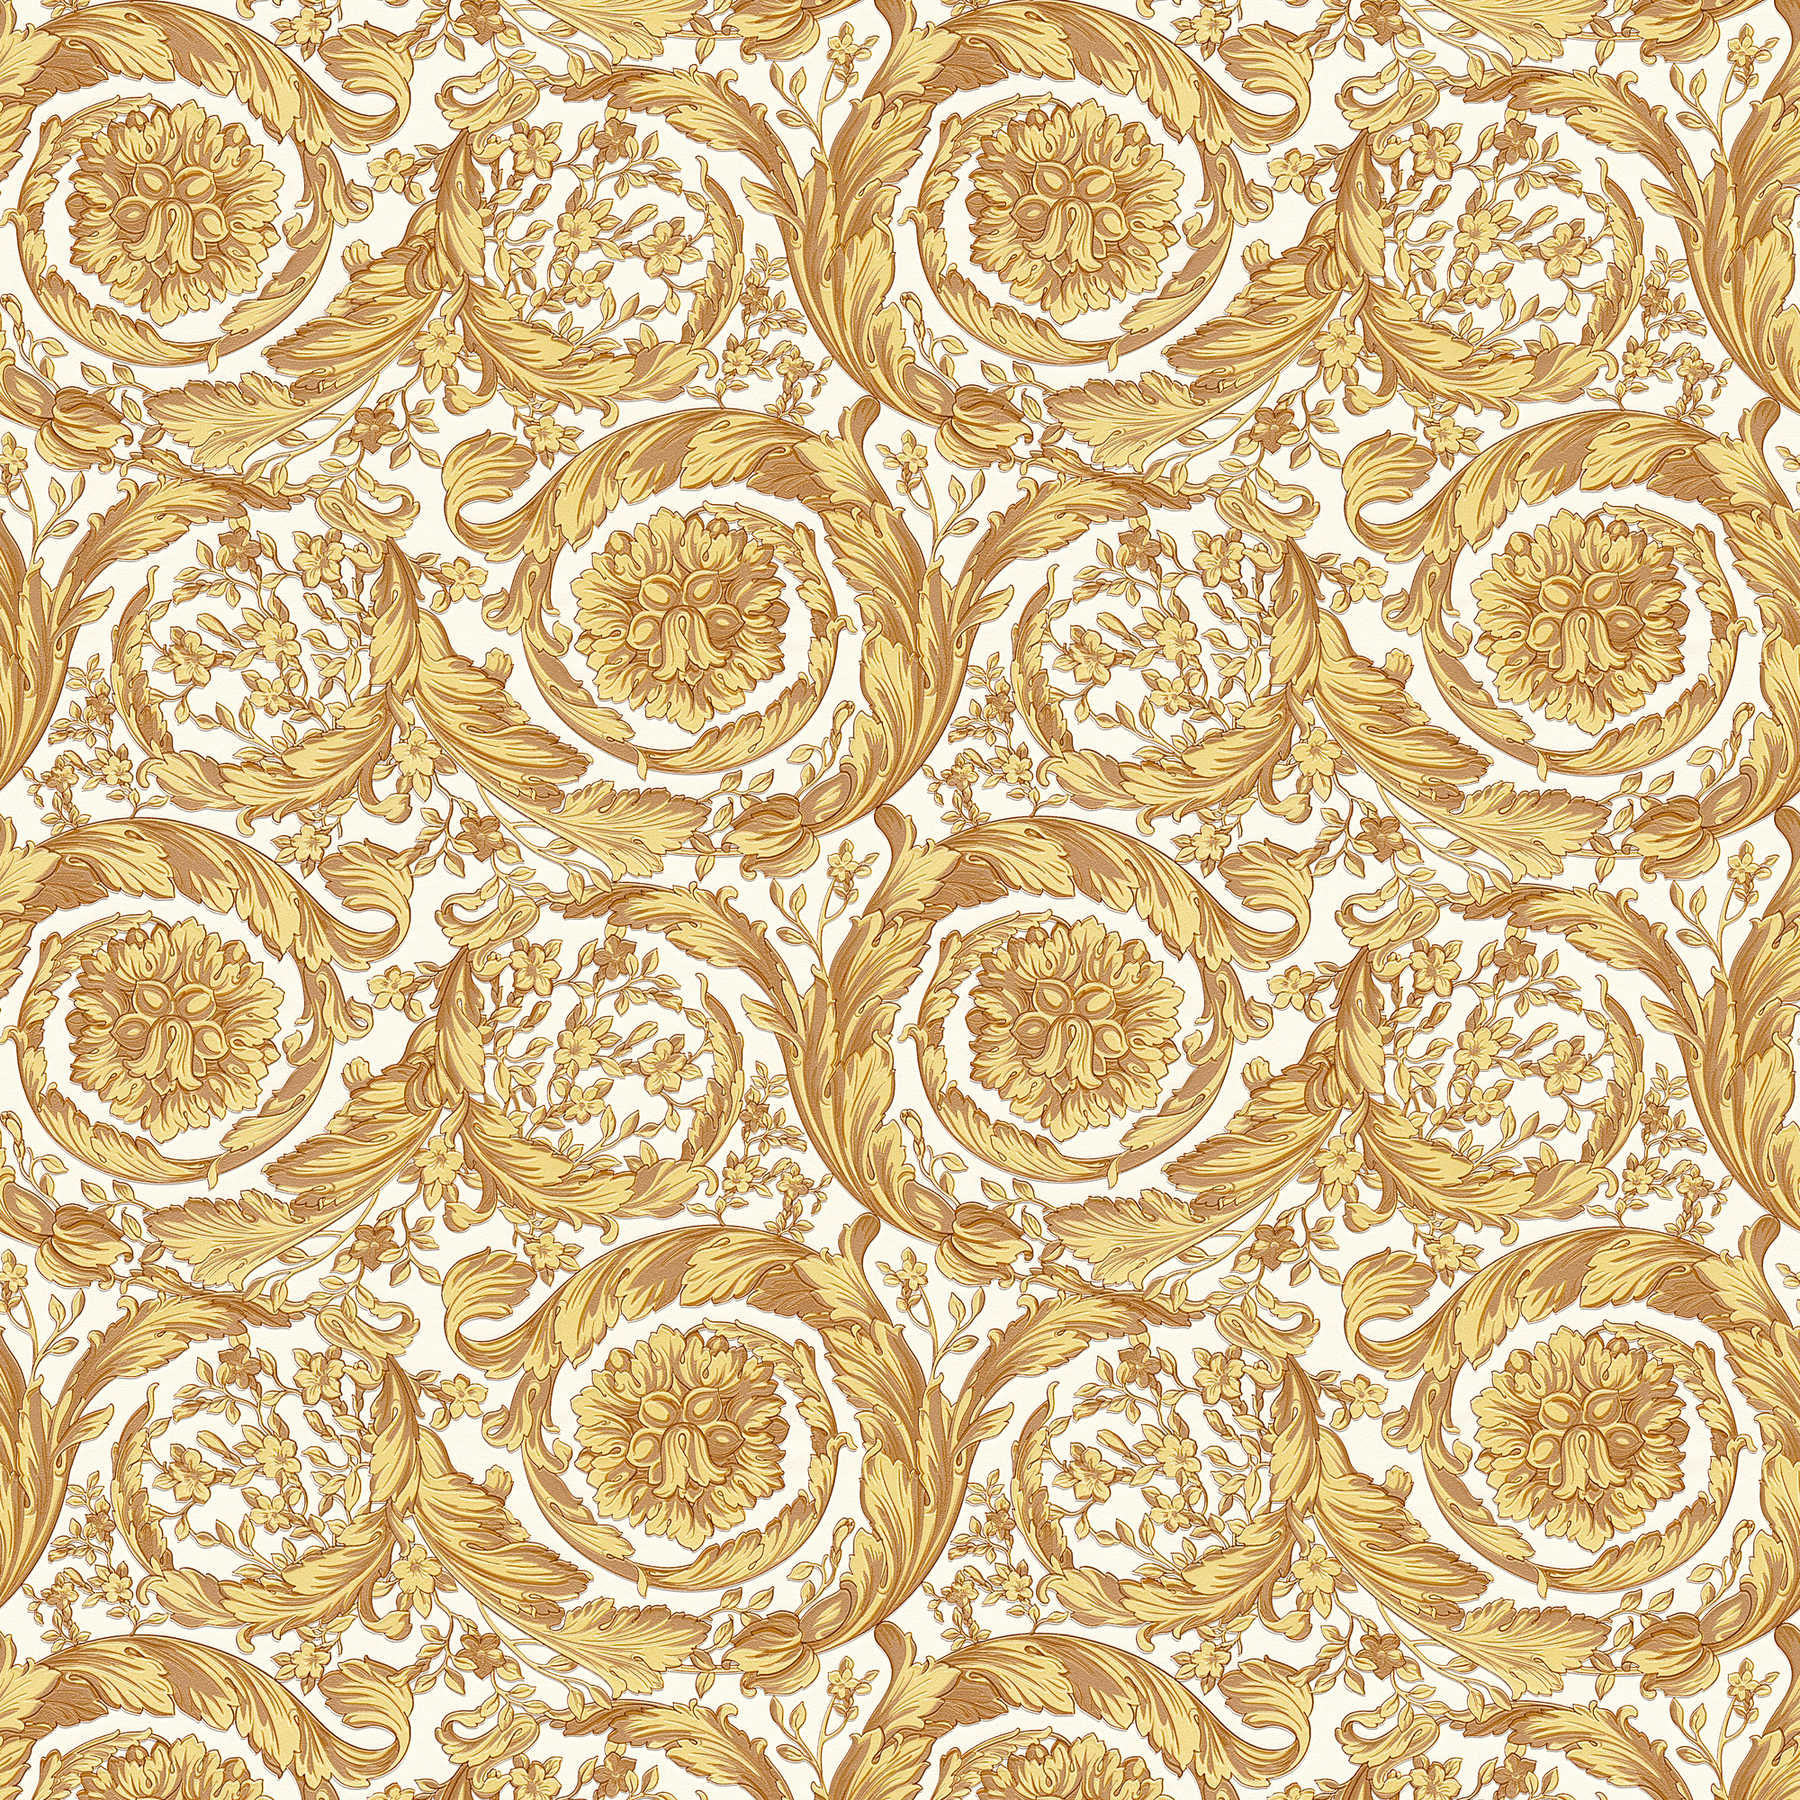 VERSACE wallpaper ornamental floral pattern - gold, yellow, beige
